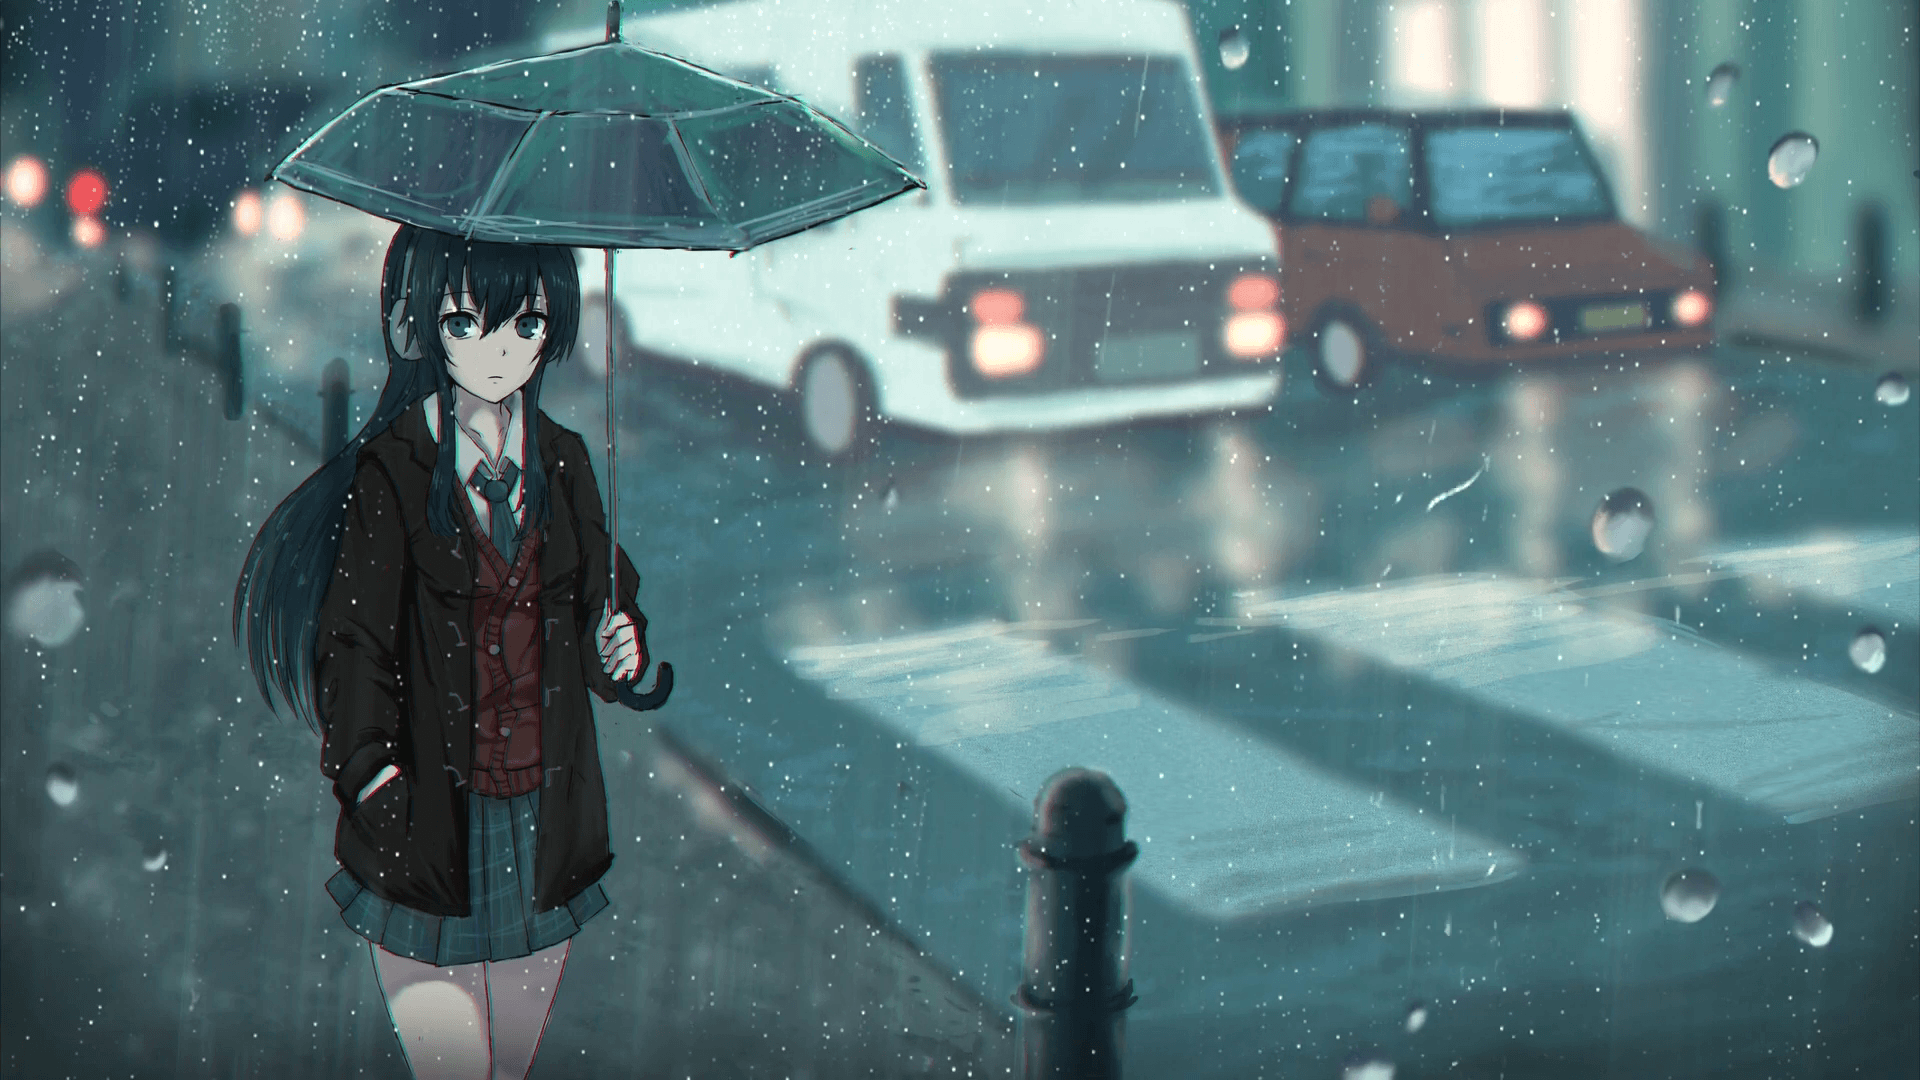 Download wallpaper 1920x1080 girl, umbrella, rain, anime, blue full hd,  hdtv, fhd, 1080p hd background